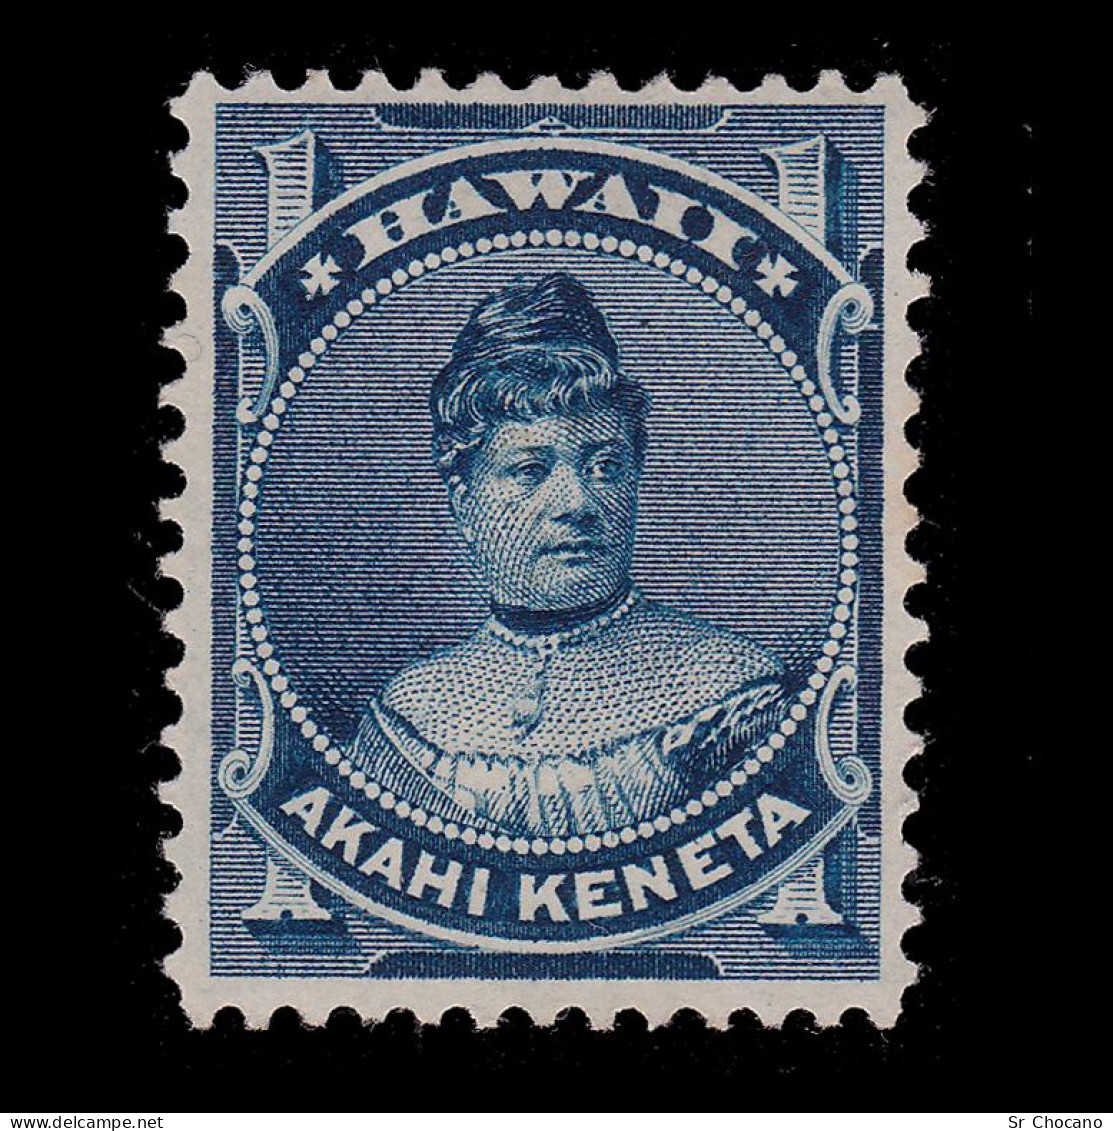 HAWAII Stamp.Likelike.1882.1c.CENTERED.SCOTT 37.MNG - Hawaii